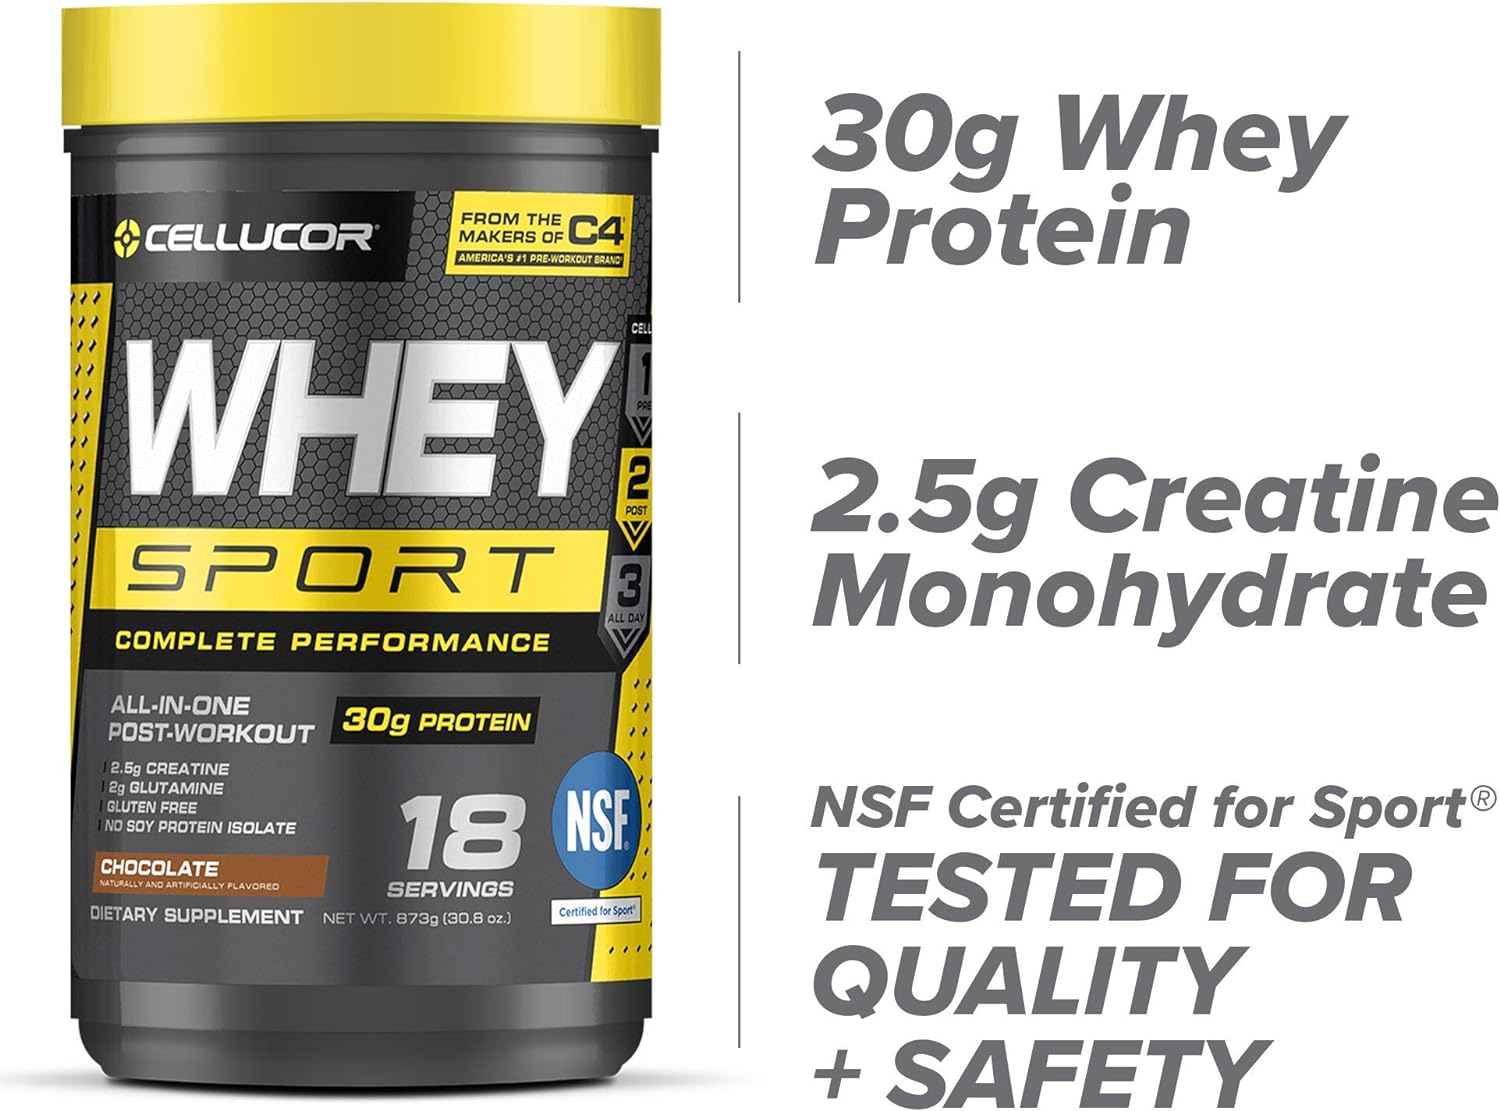 Cellucor Whey Sport Protein Powder 2lb